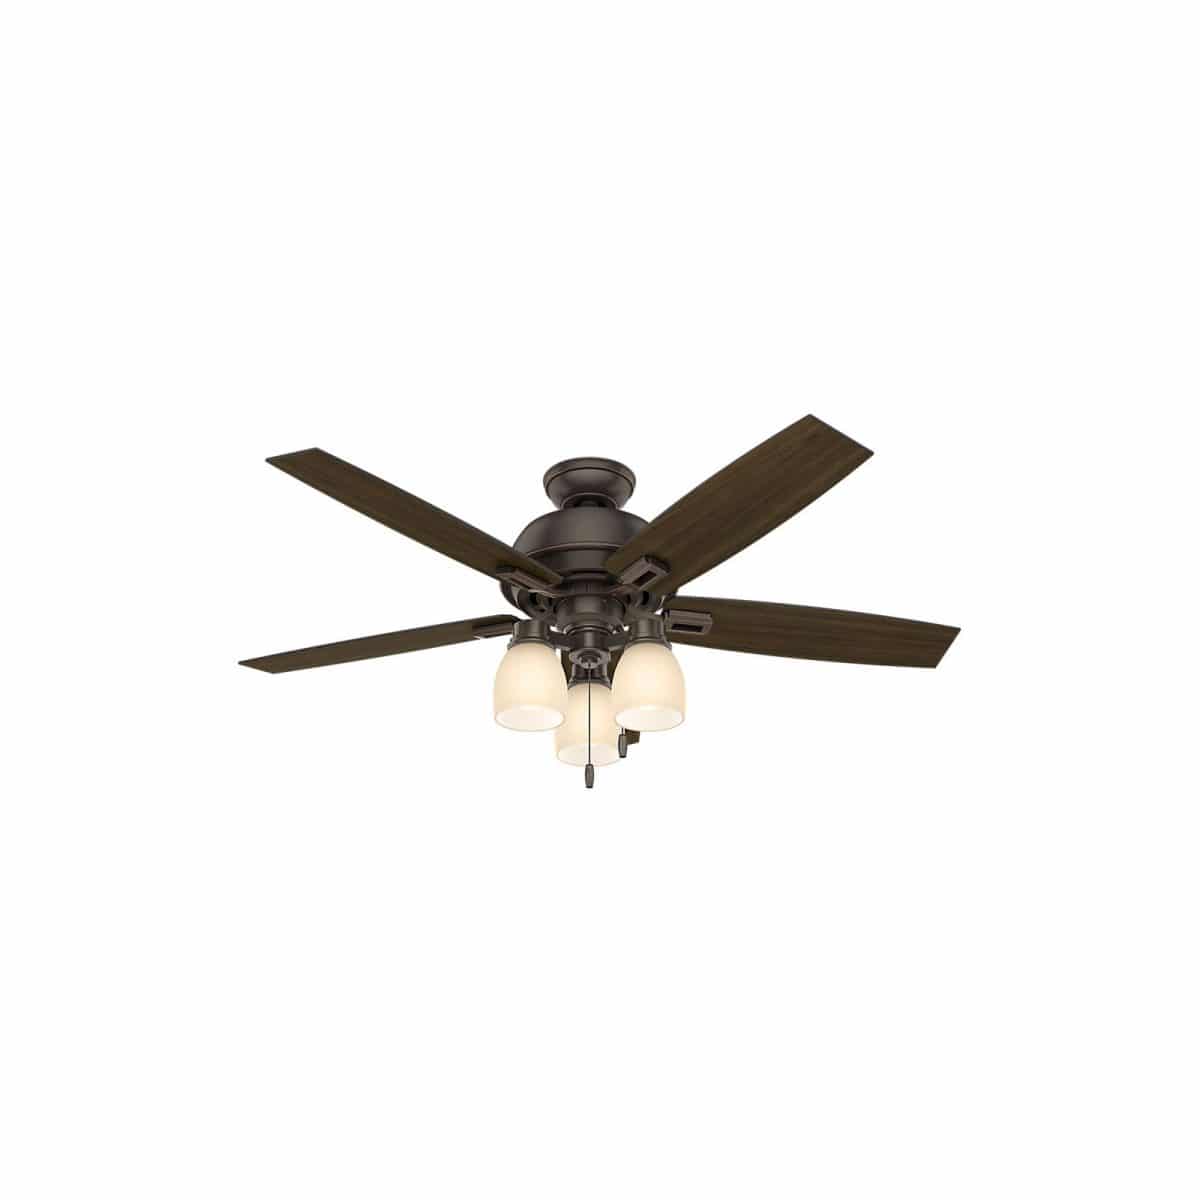 Affordable farmhouse ceiling fan 44" Donegan 5 blade ceiling fan